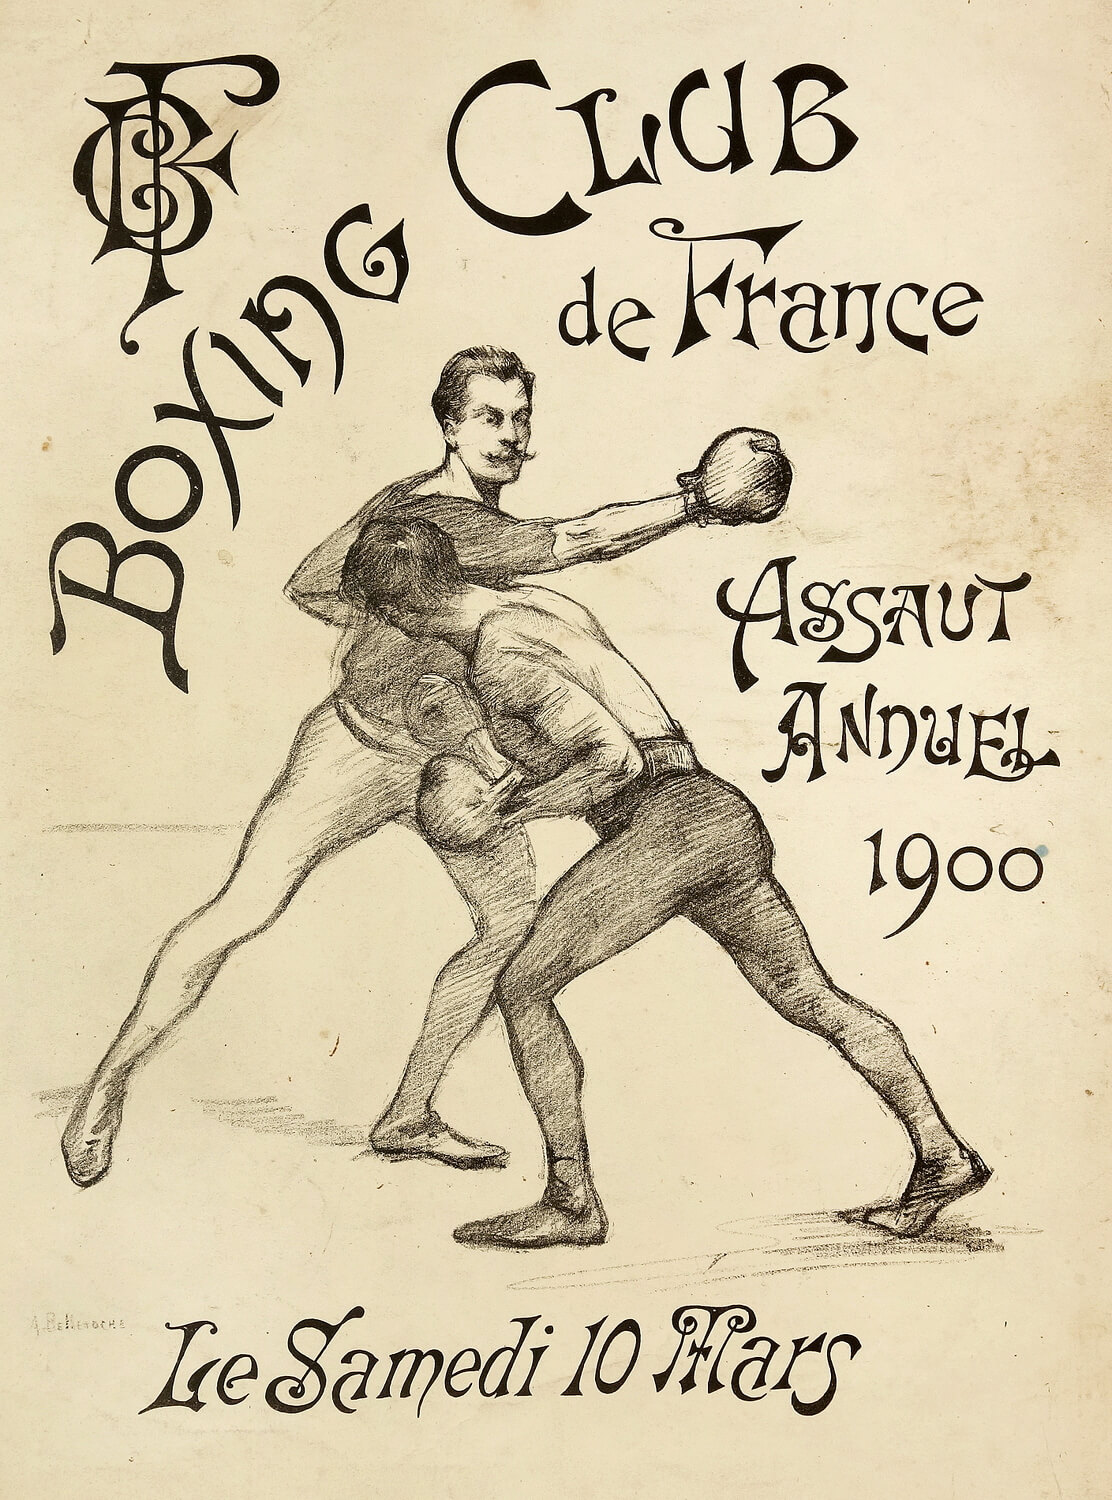 Albert de Belleroche - Boxing Club de France